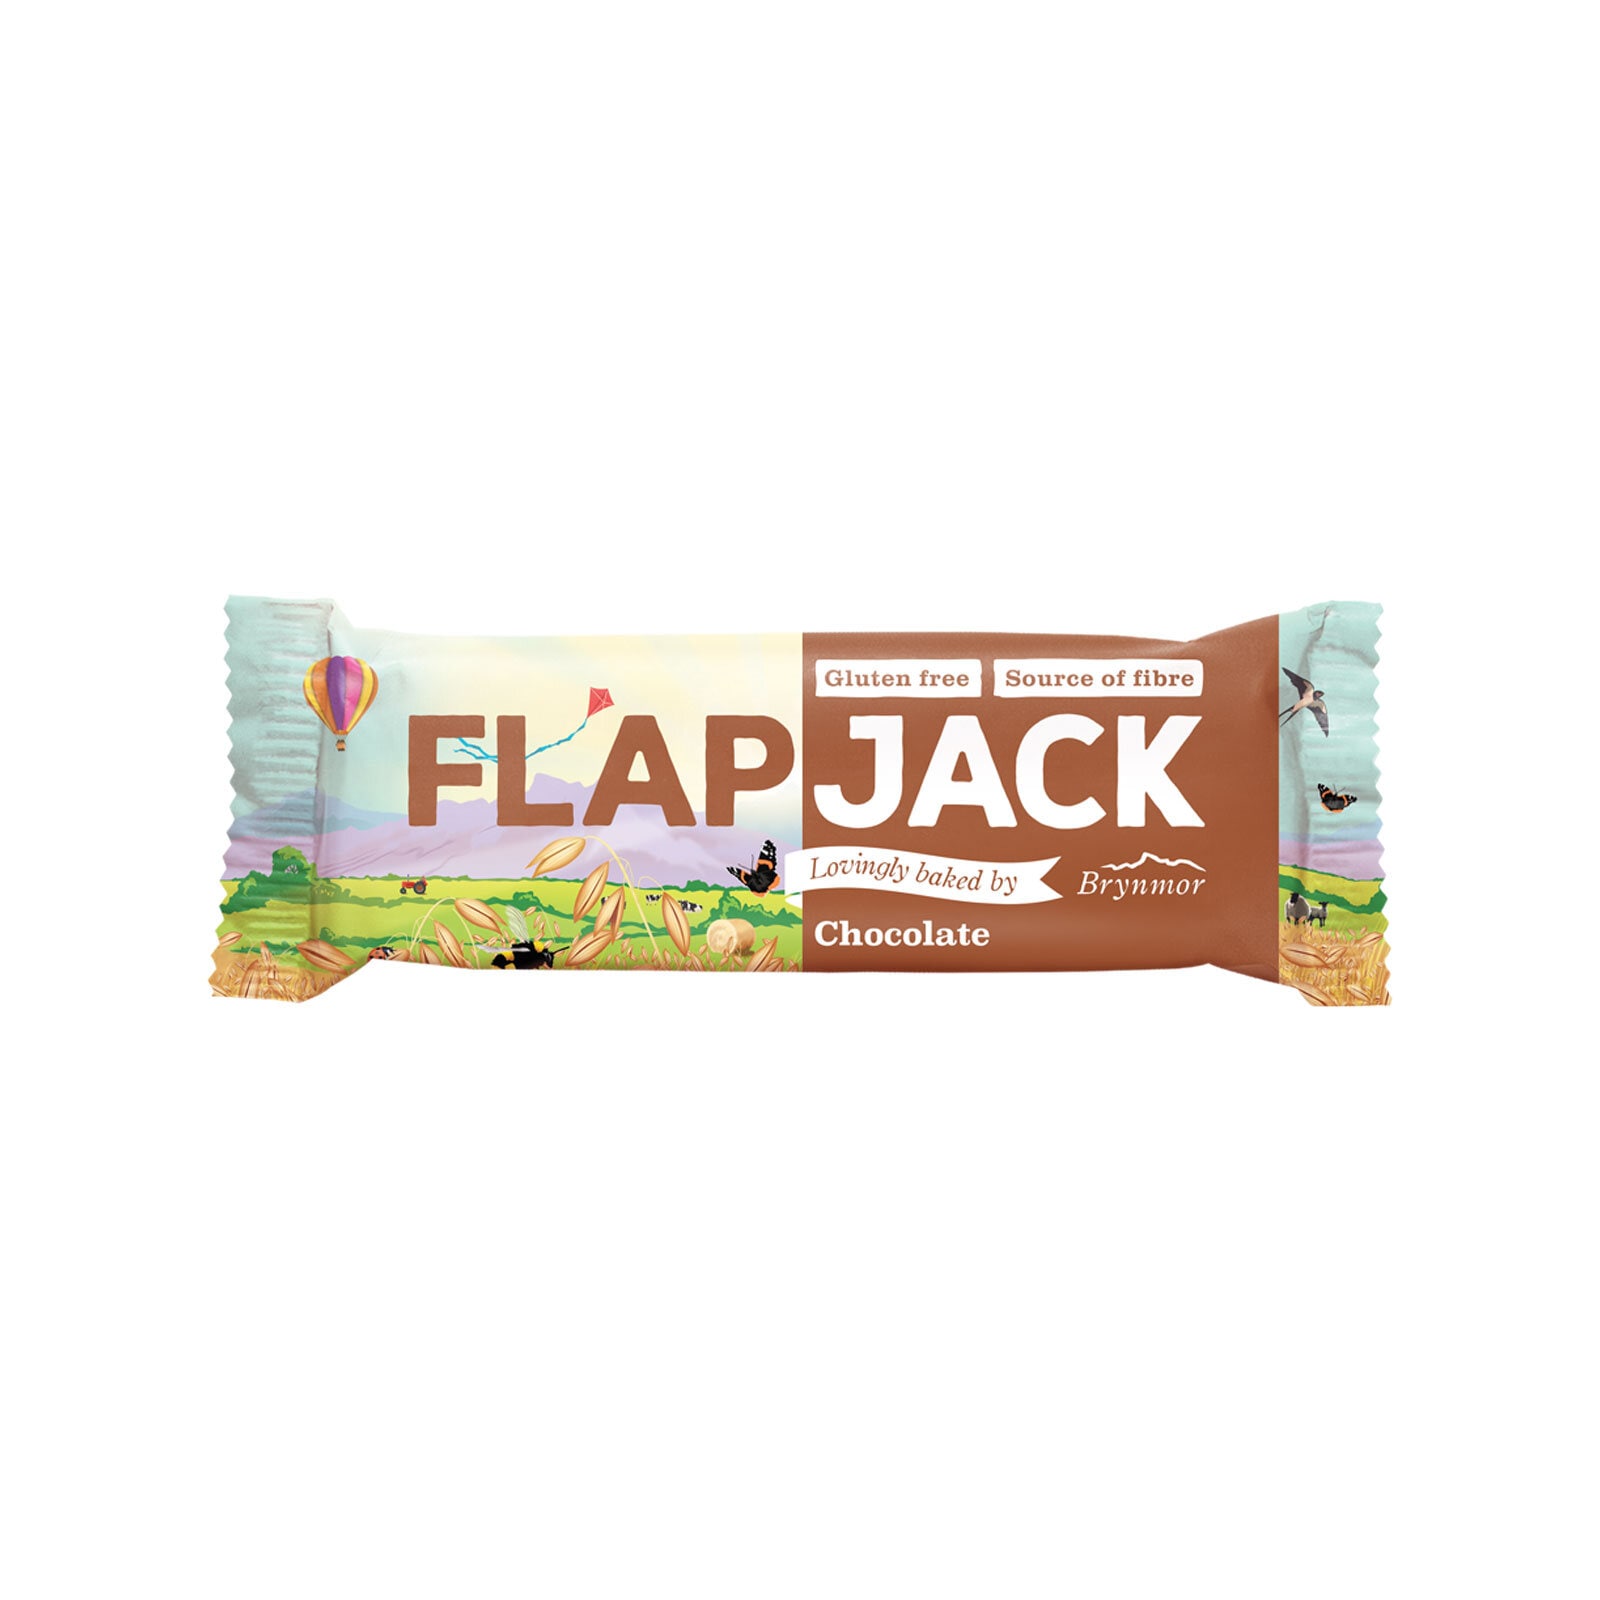 Flapjack chocolate